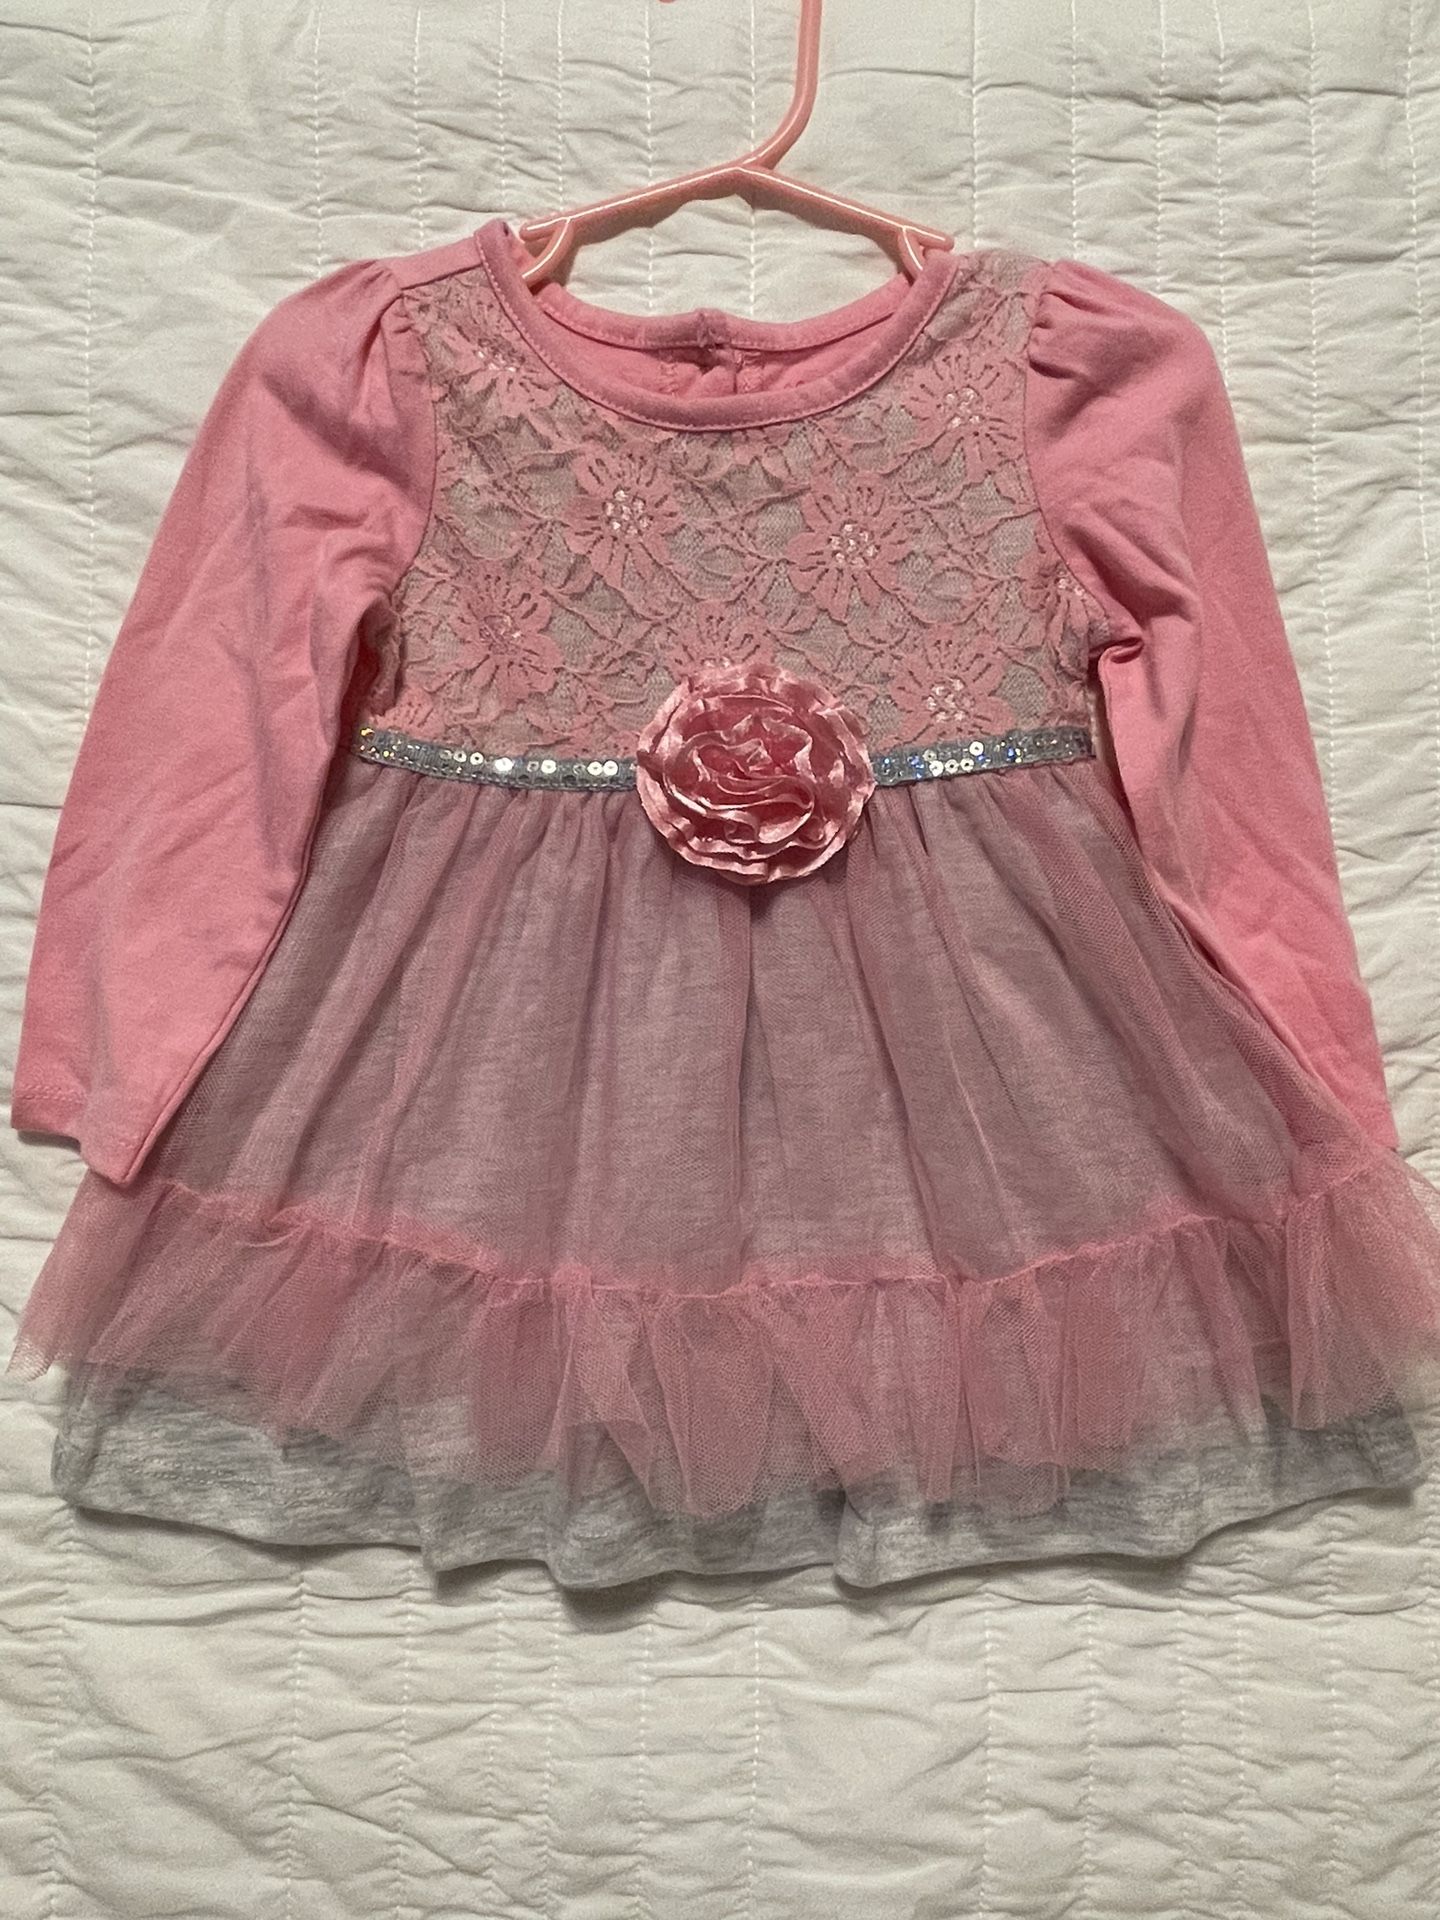 Nanette Kids Pink Lace Toddler Dress Size 18 Months 